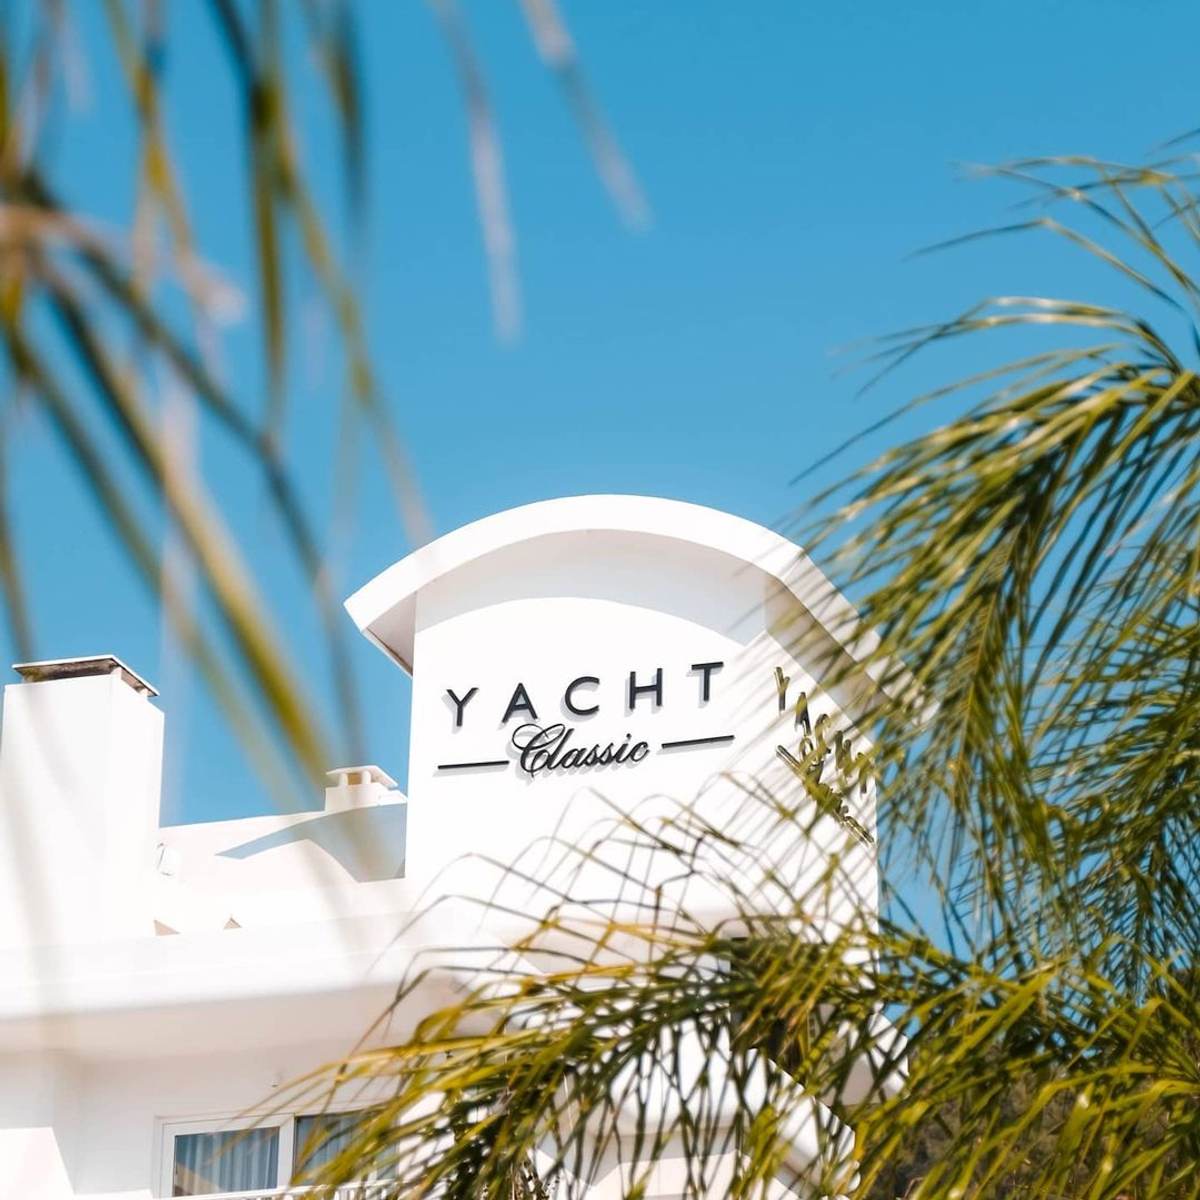 yacht classic hotel trivago